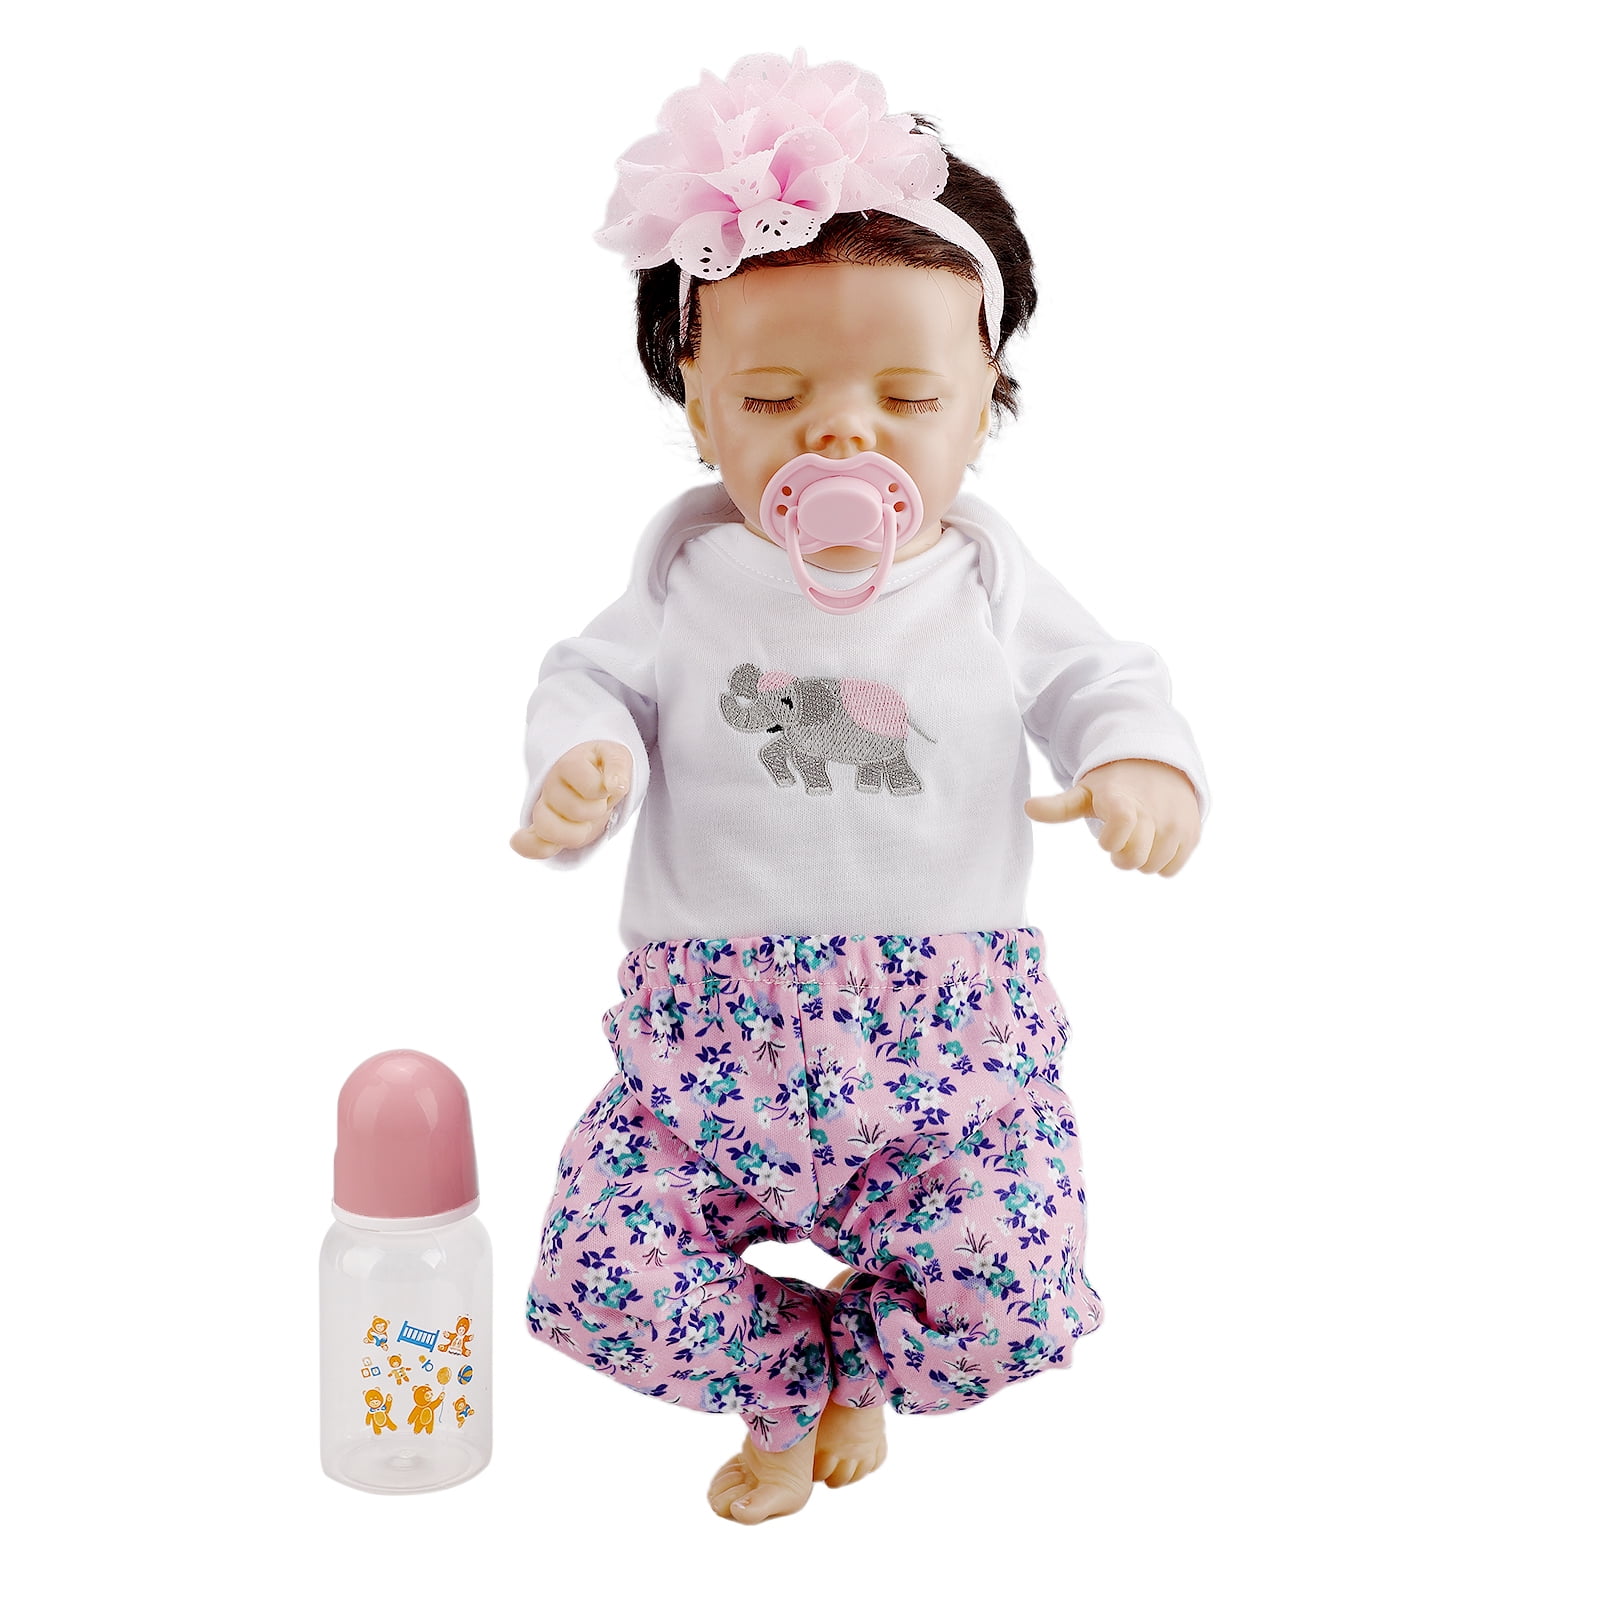 Reborn Preemie Newborn Lifelike Baby Girl Silicone Vinyl Soft Realistic Doll 17' 